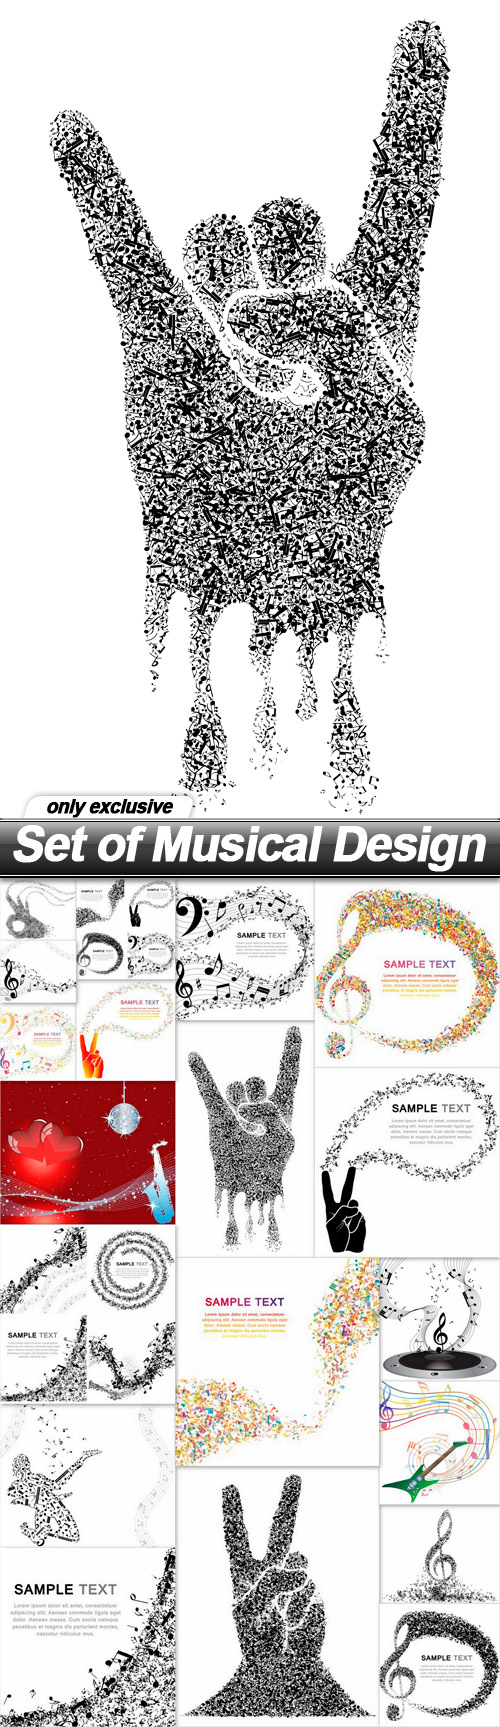 Set of Musical Design - 19 EPS